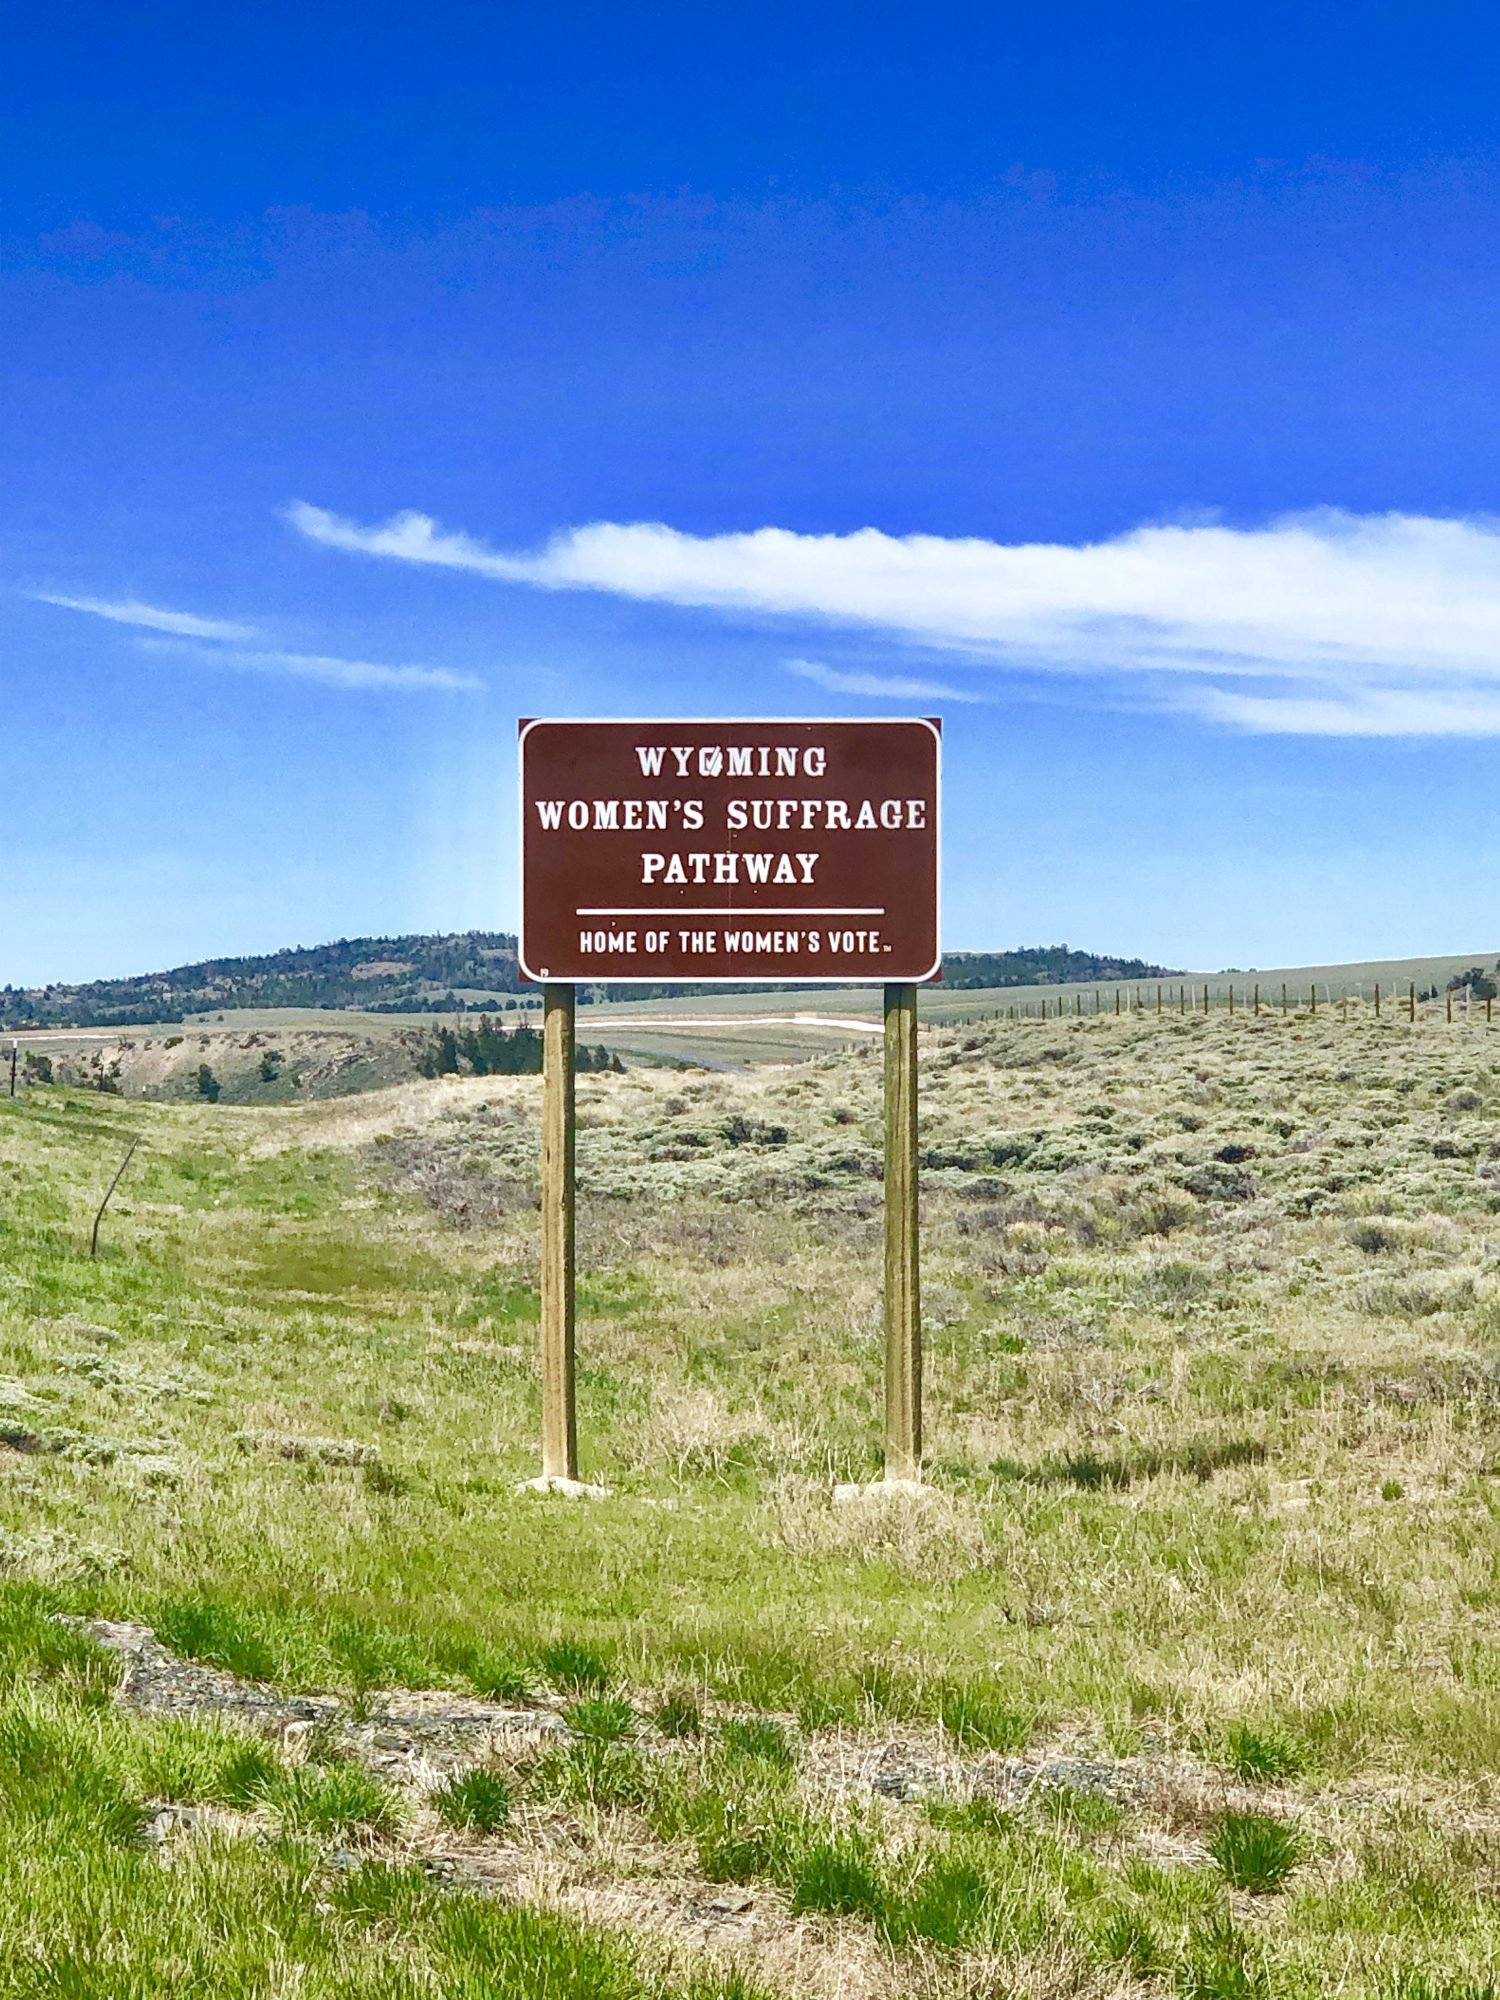 WyomingWomensSuffragePathway.jpg